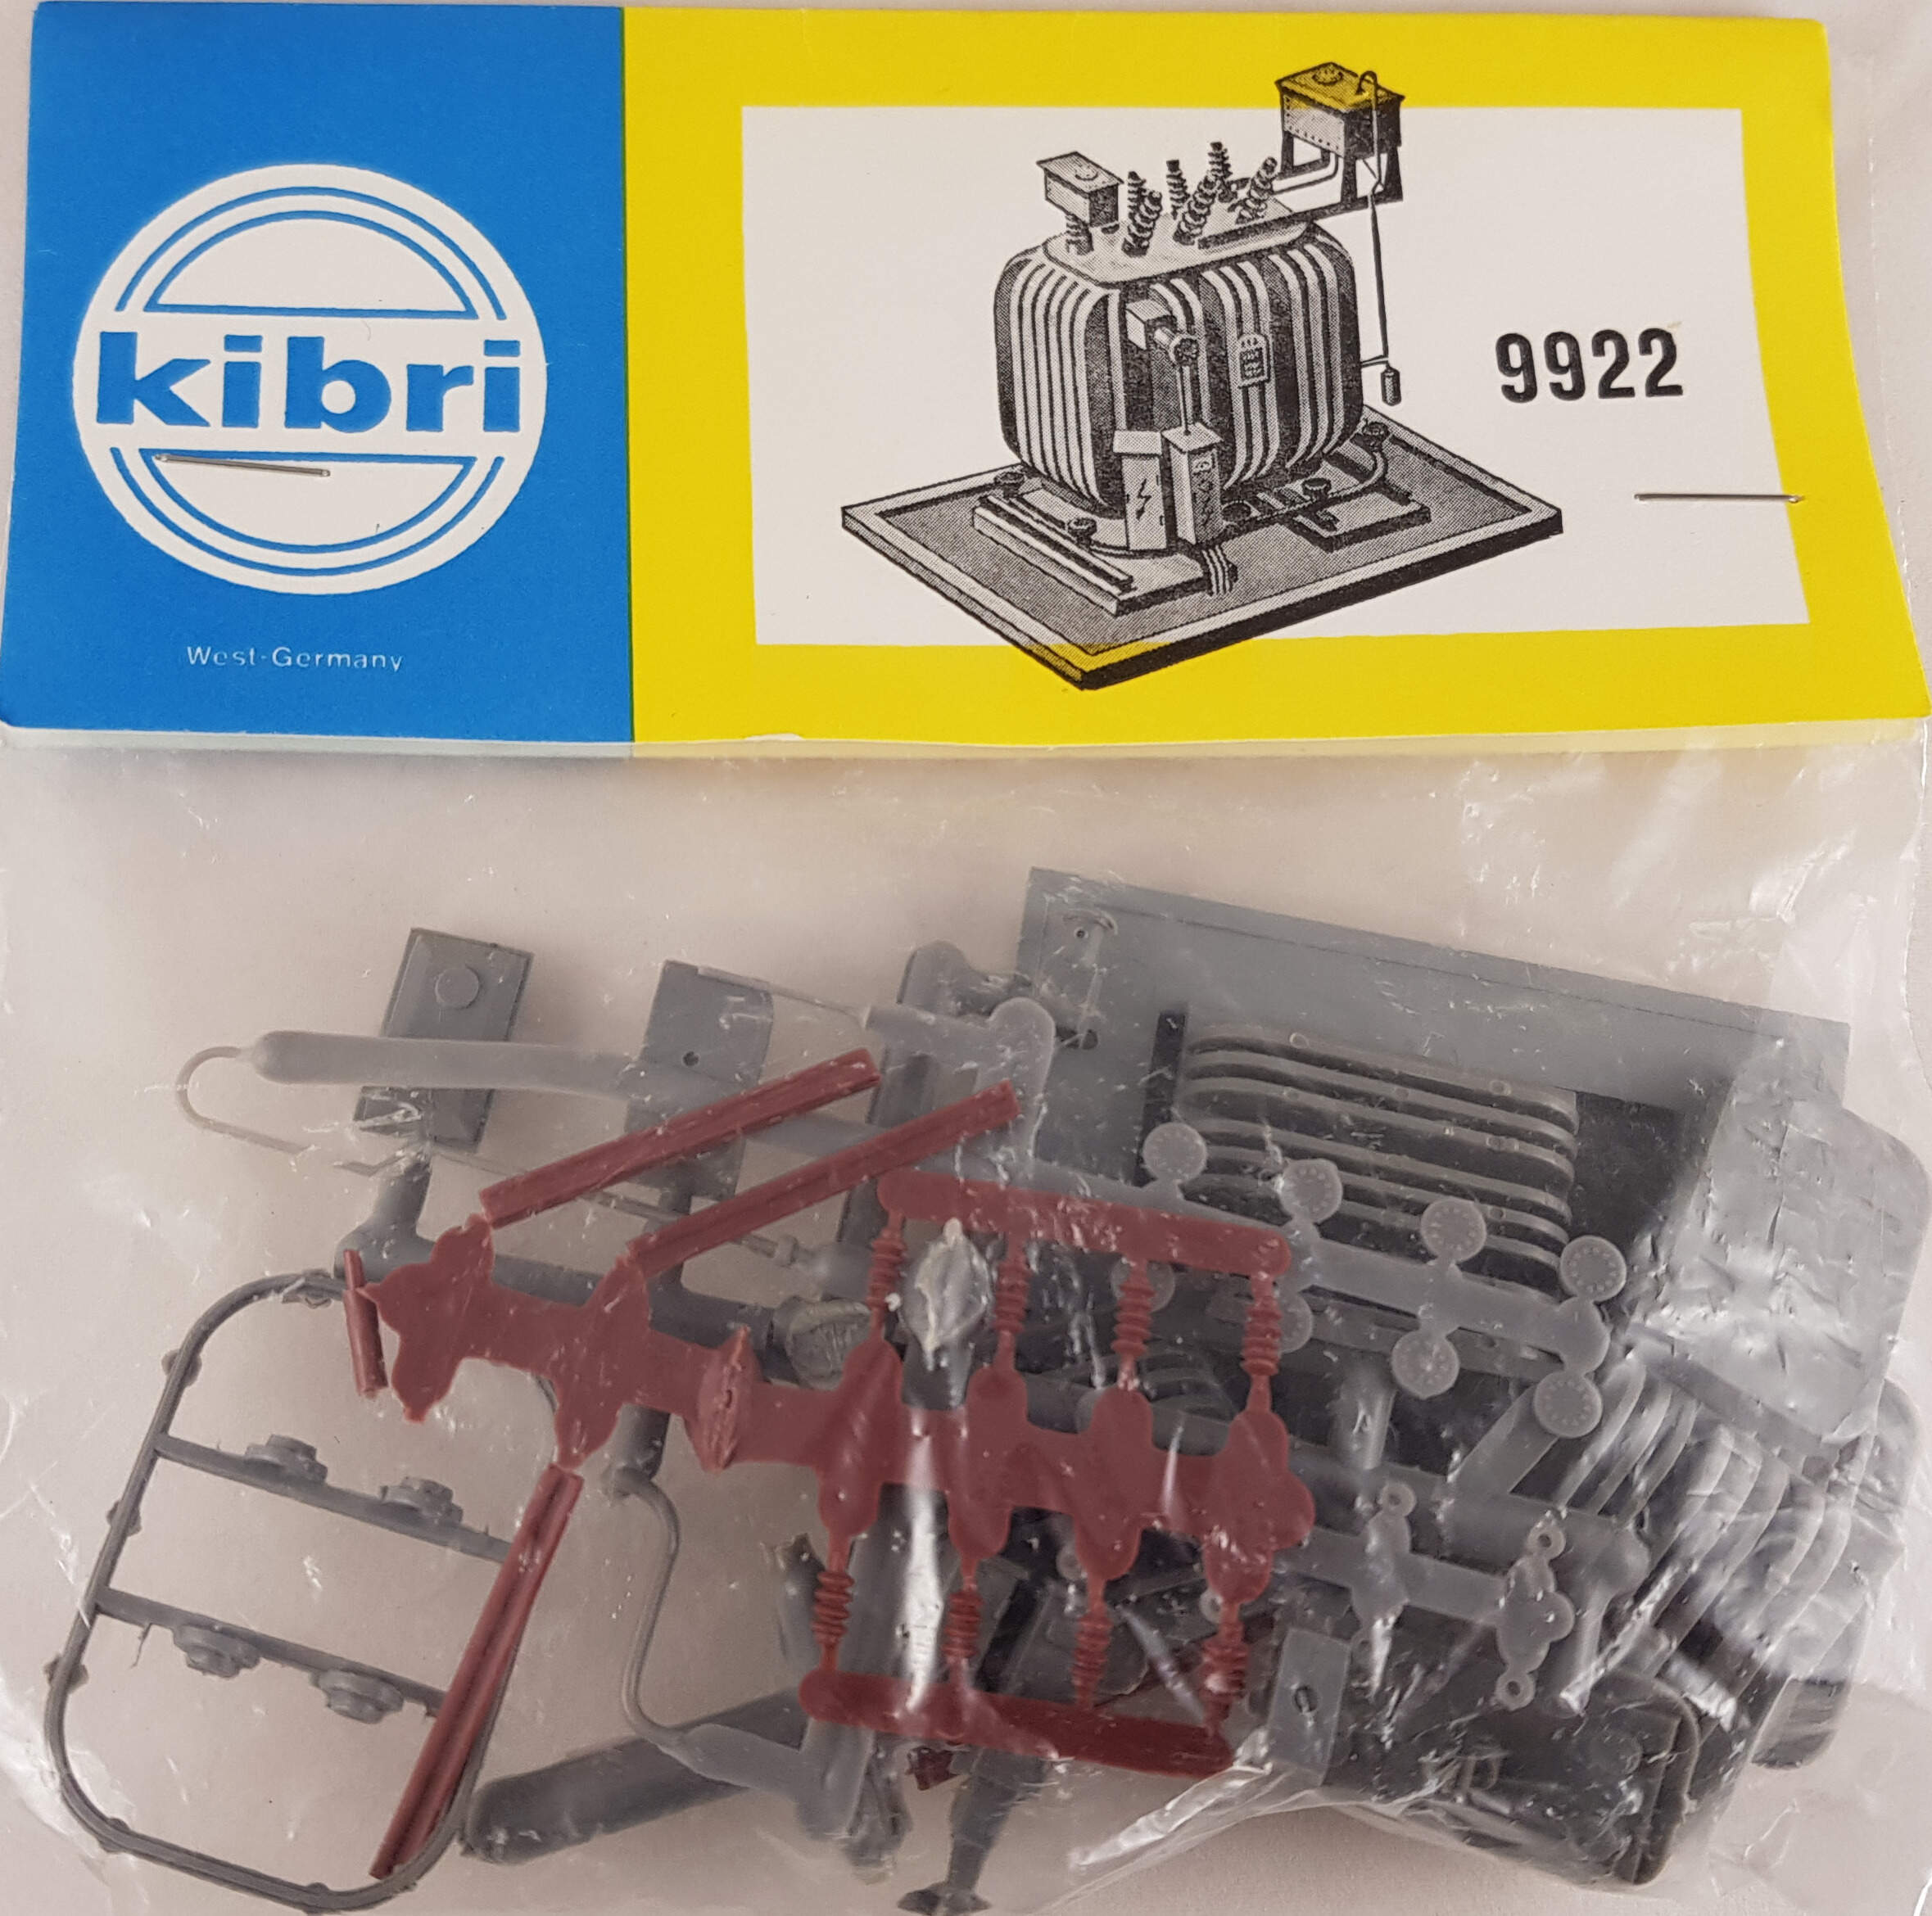 Kibri 9922 Transformator, skala H0